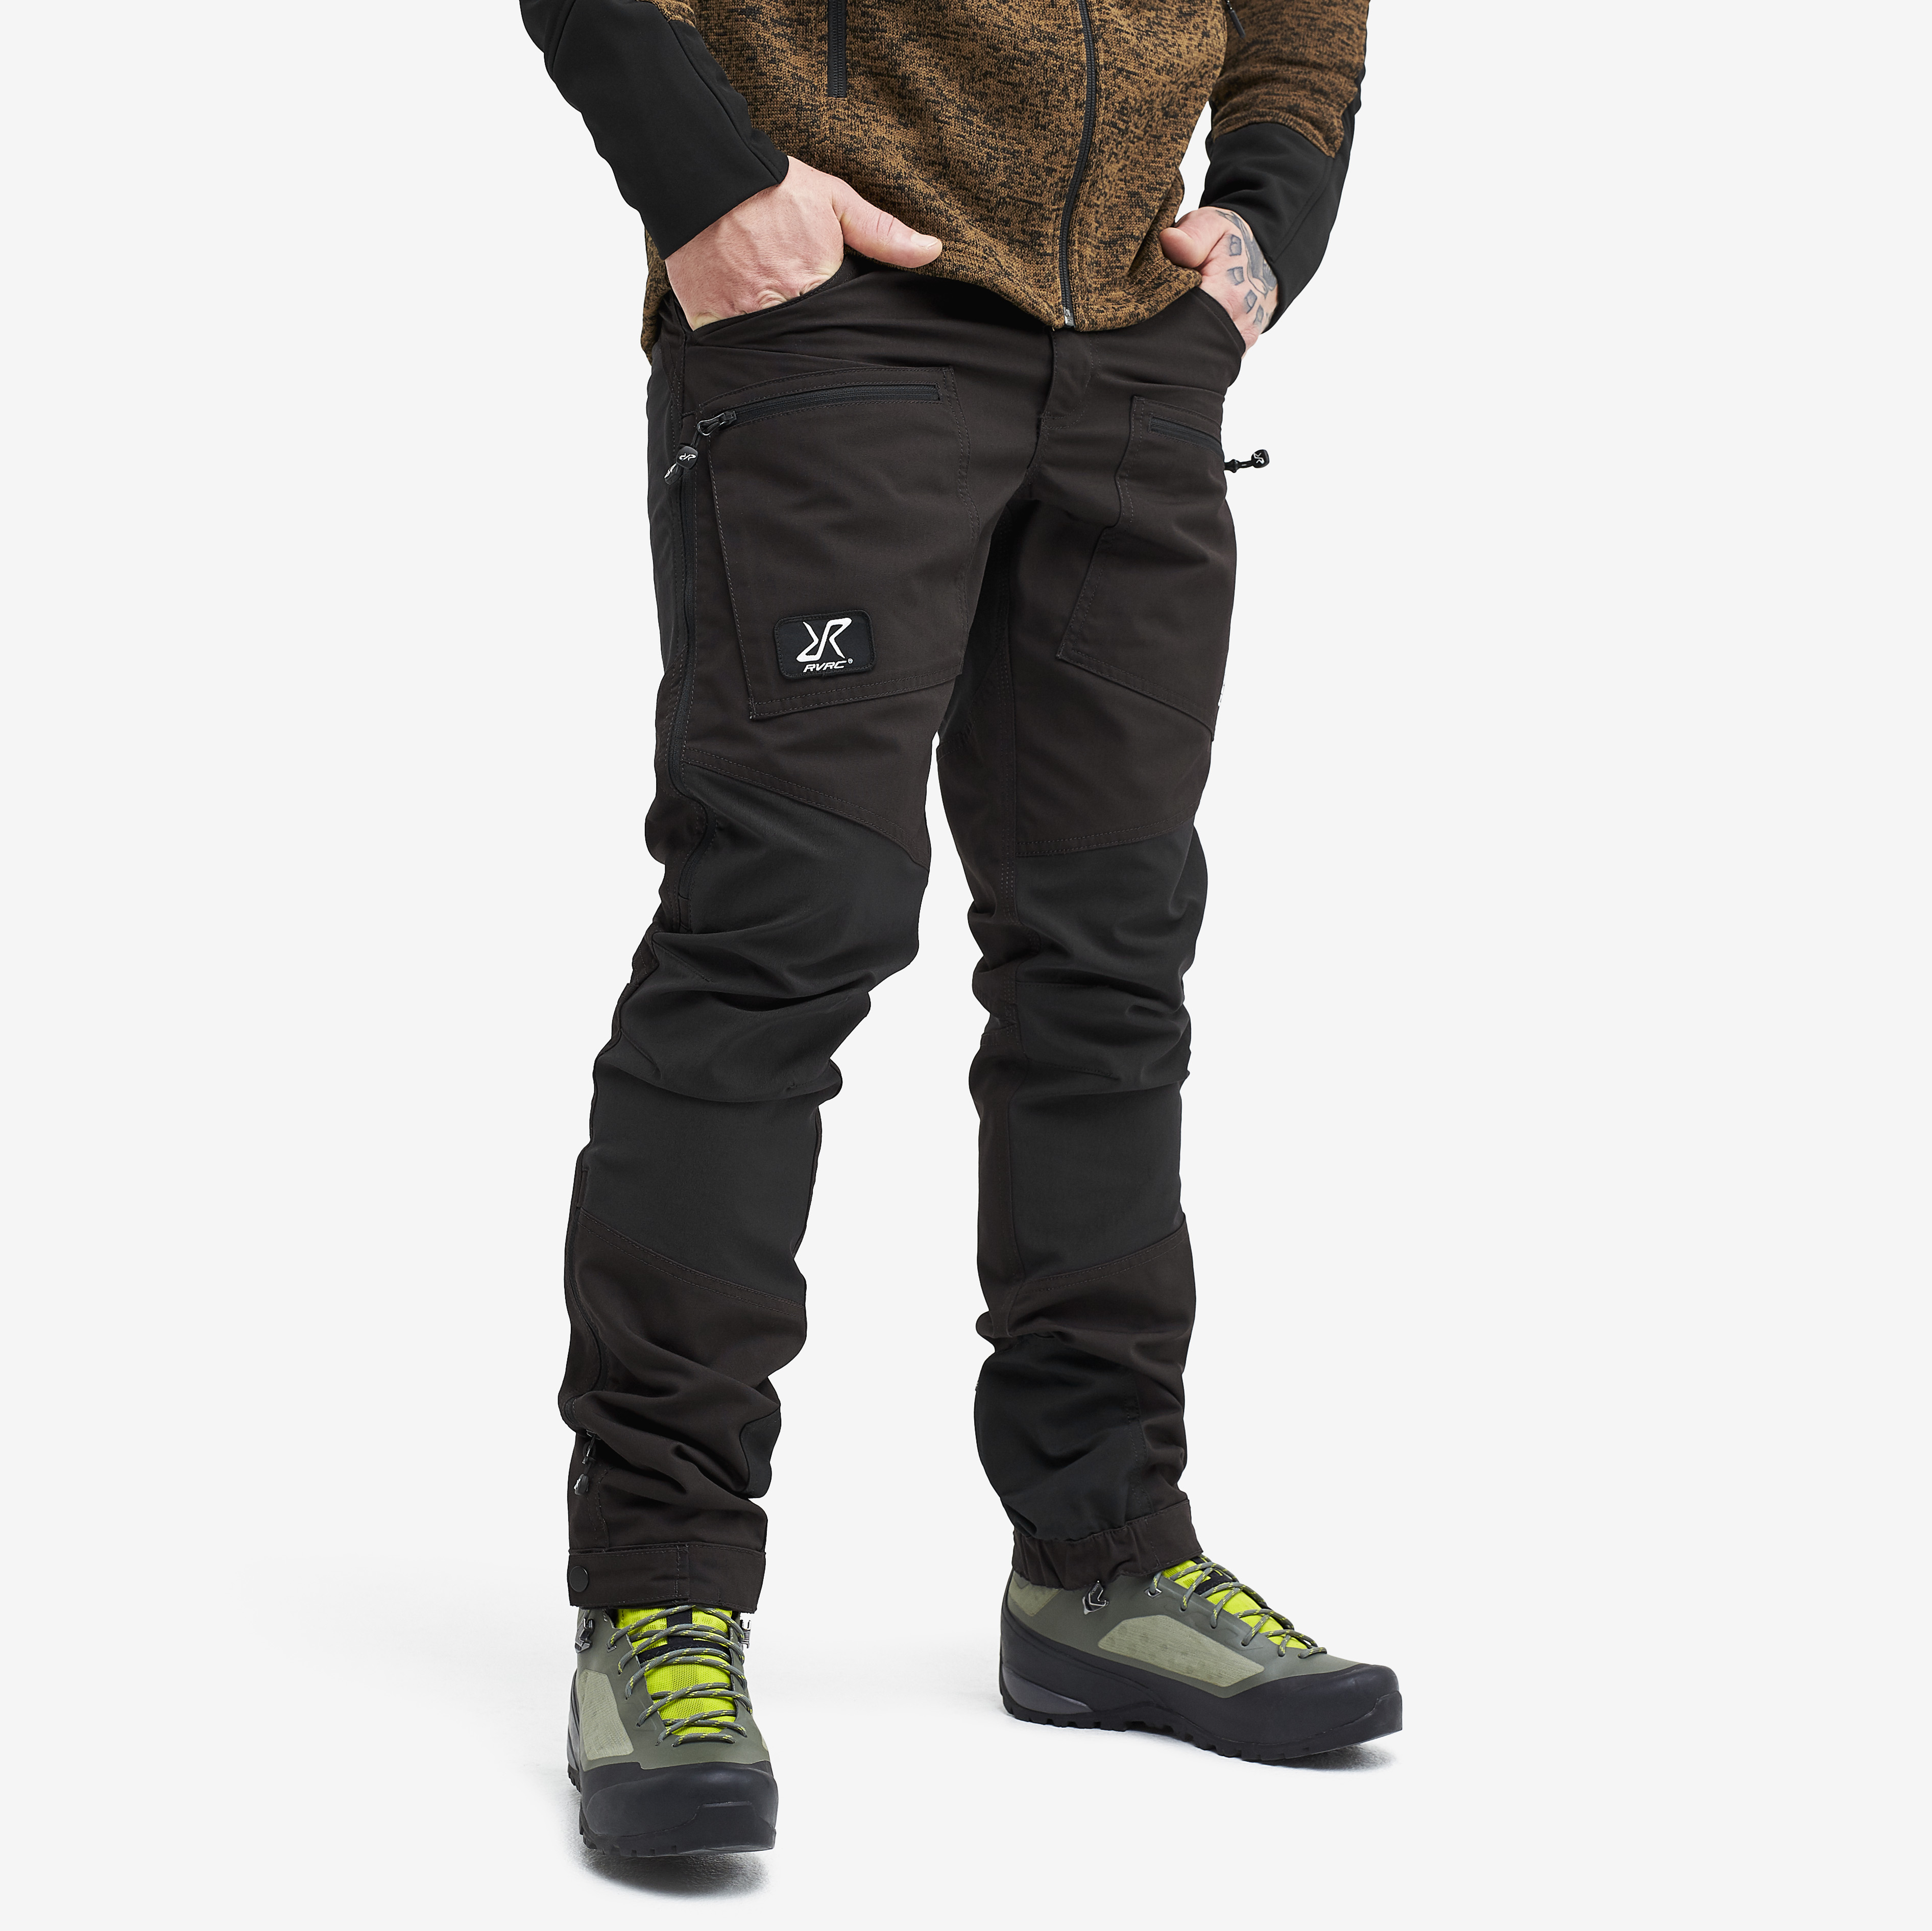 Nordwand Pro Rescue Pants Herren Edition Black | RevolutionRace